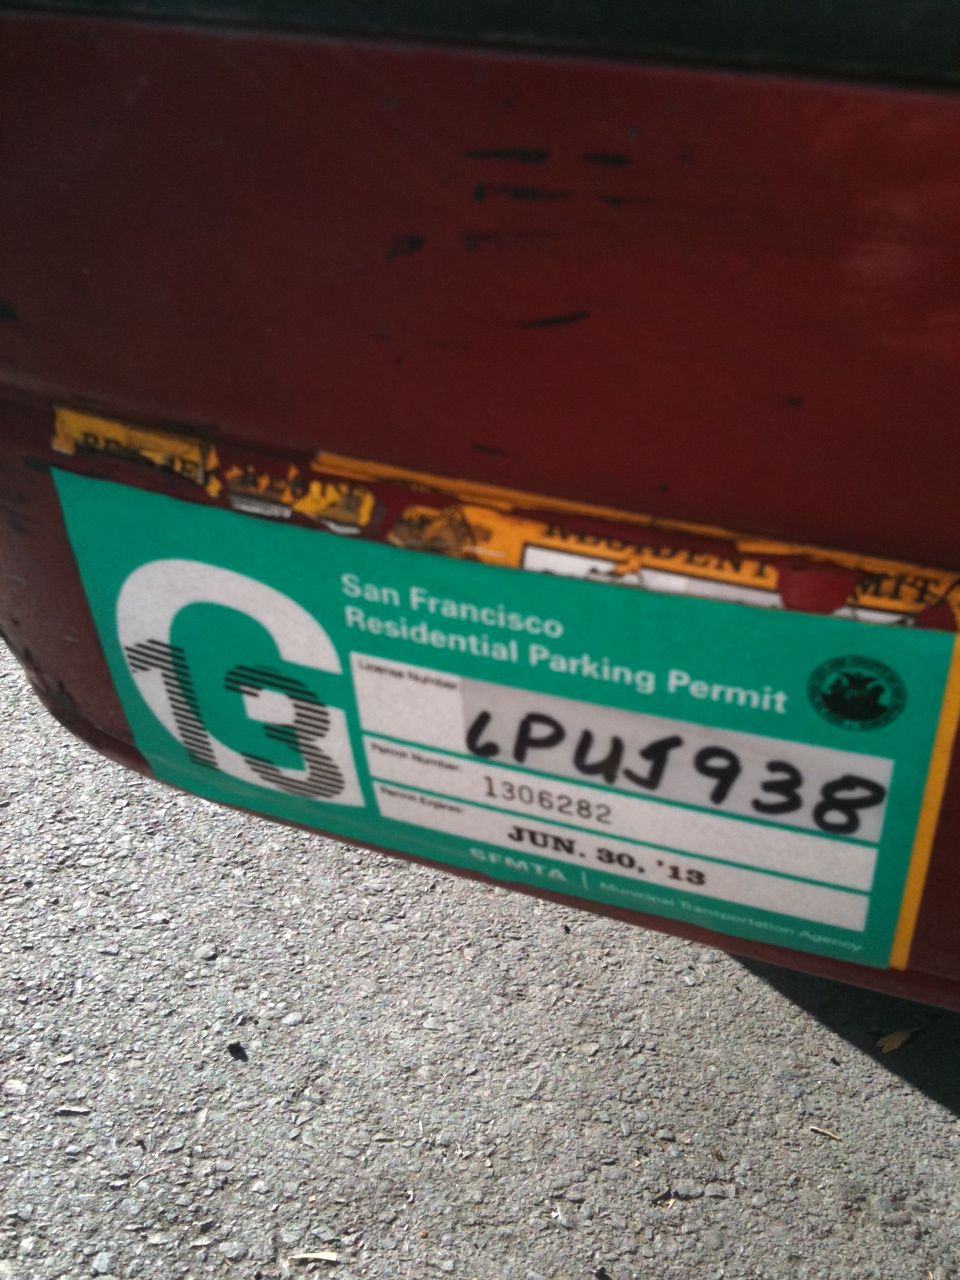 G permit & license plate number.JPG